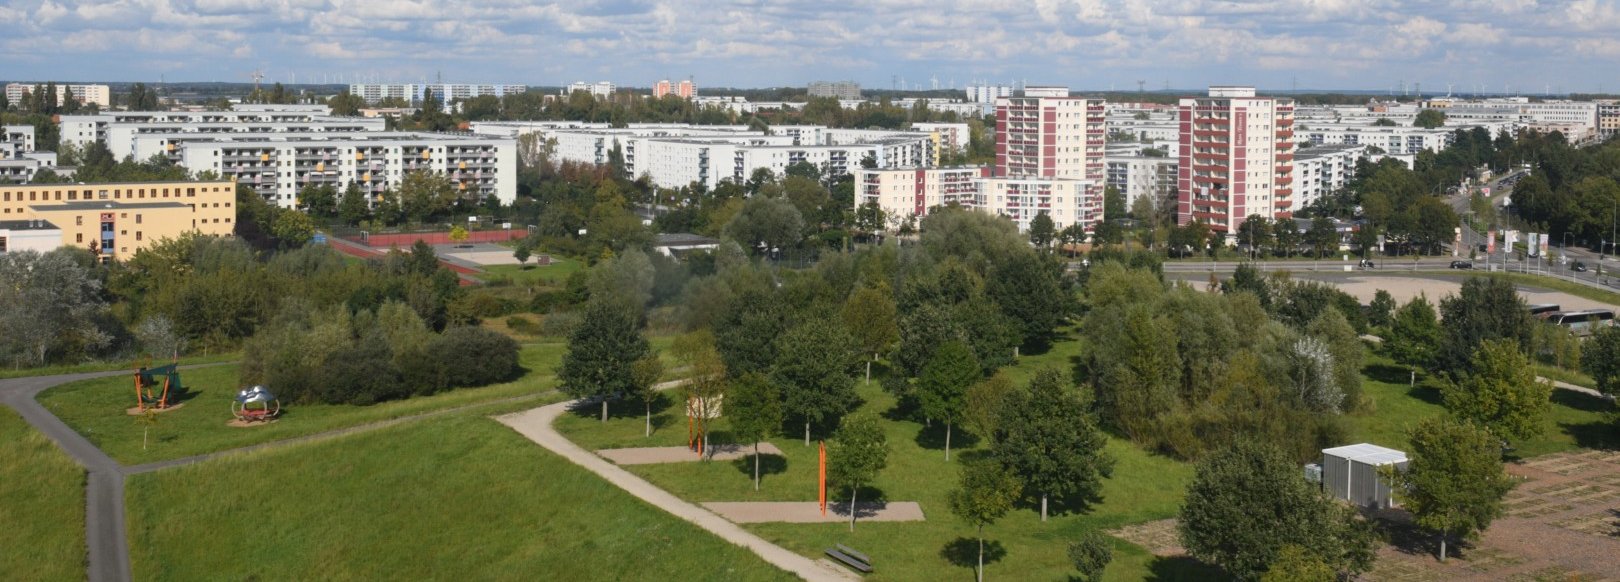 Luftbild des Jelena-Santic-Friedenspark an der Hellersdorfer Straße